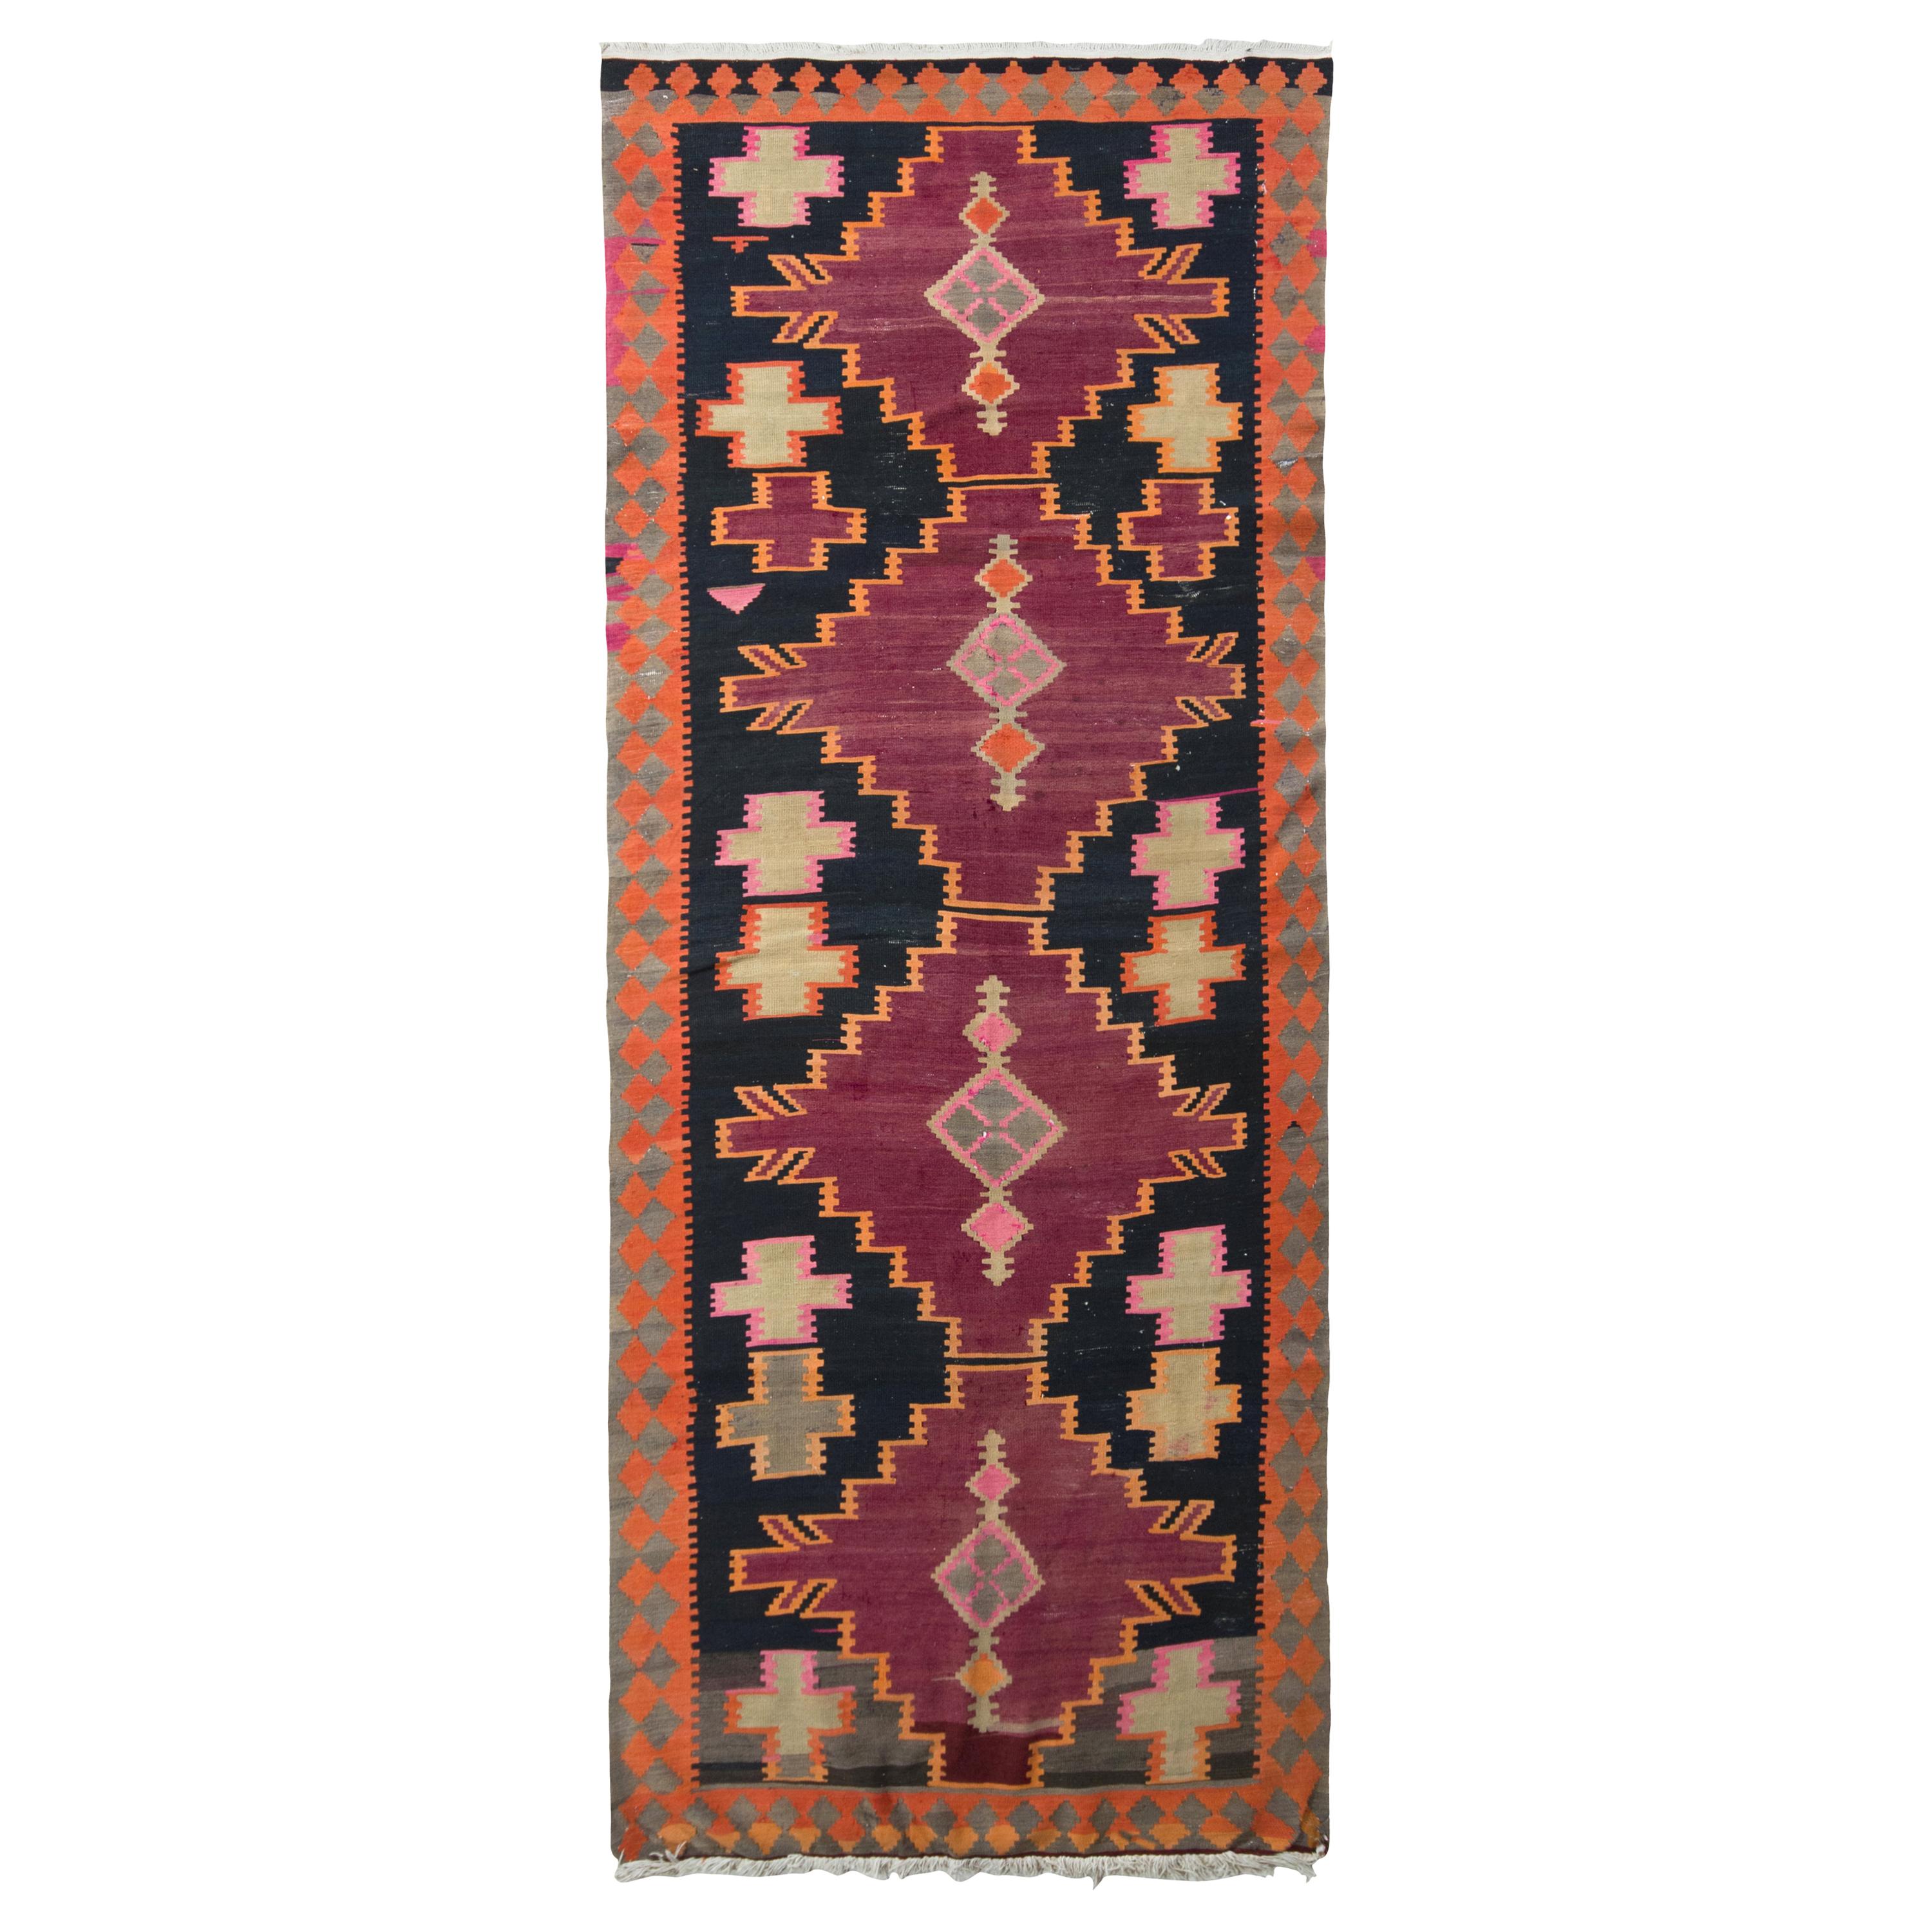 Handwoven Antique Kilim Rug in Black and Orange Geometric Pattern by Rug & Kilim For Sale